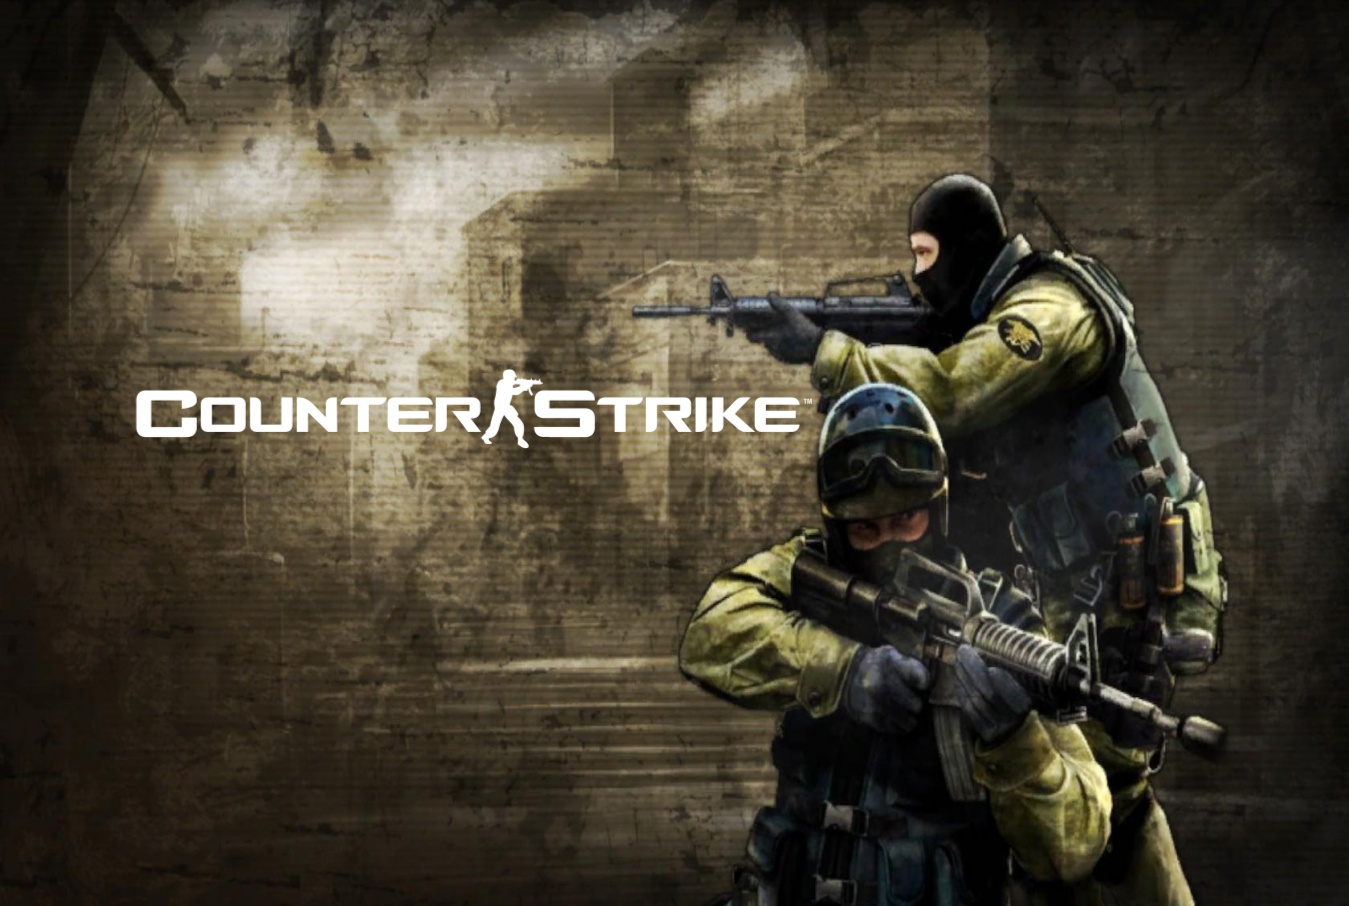 Counter-Strike 1.6 game client 0-day exploited to spread Belonard trojan